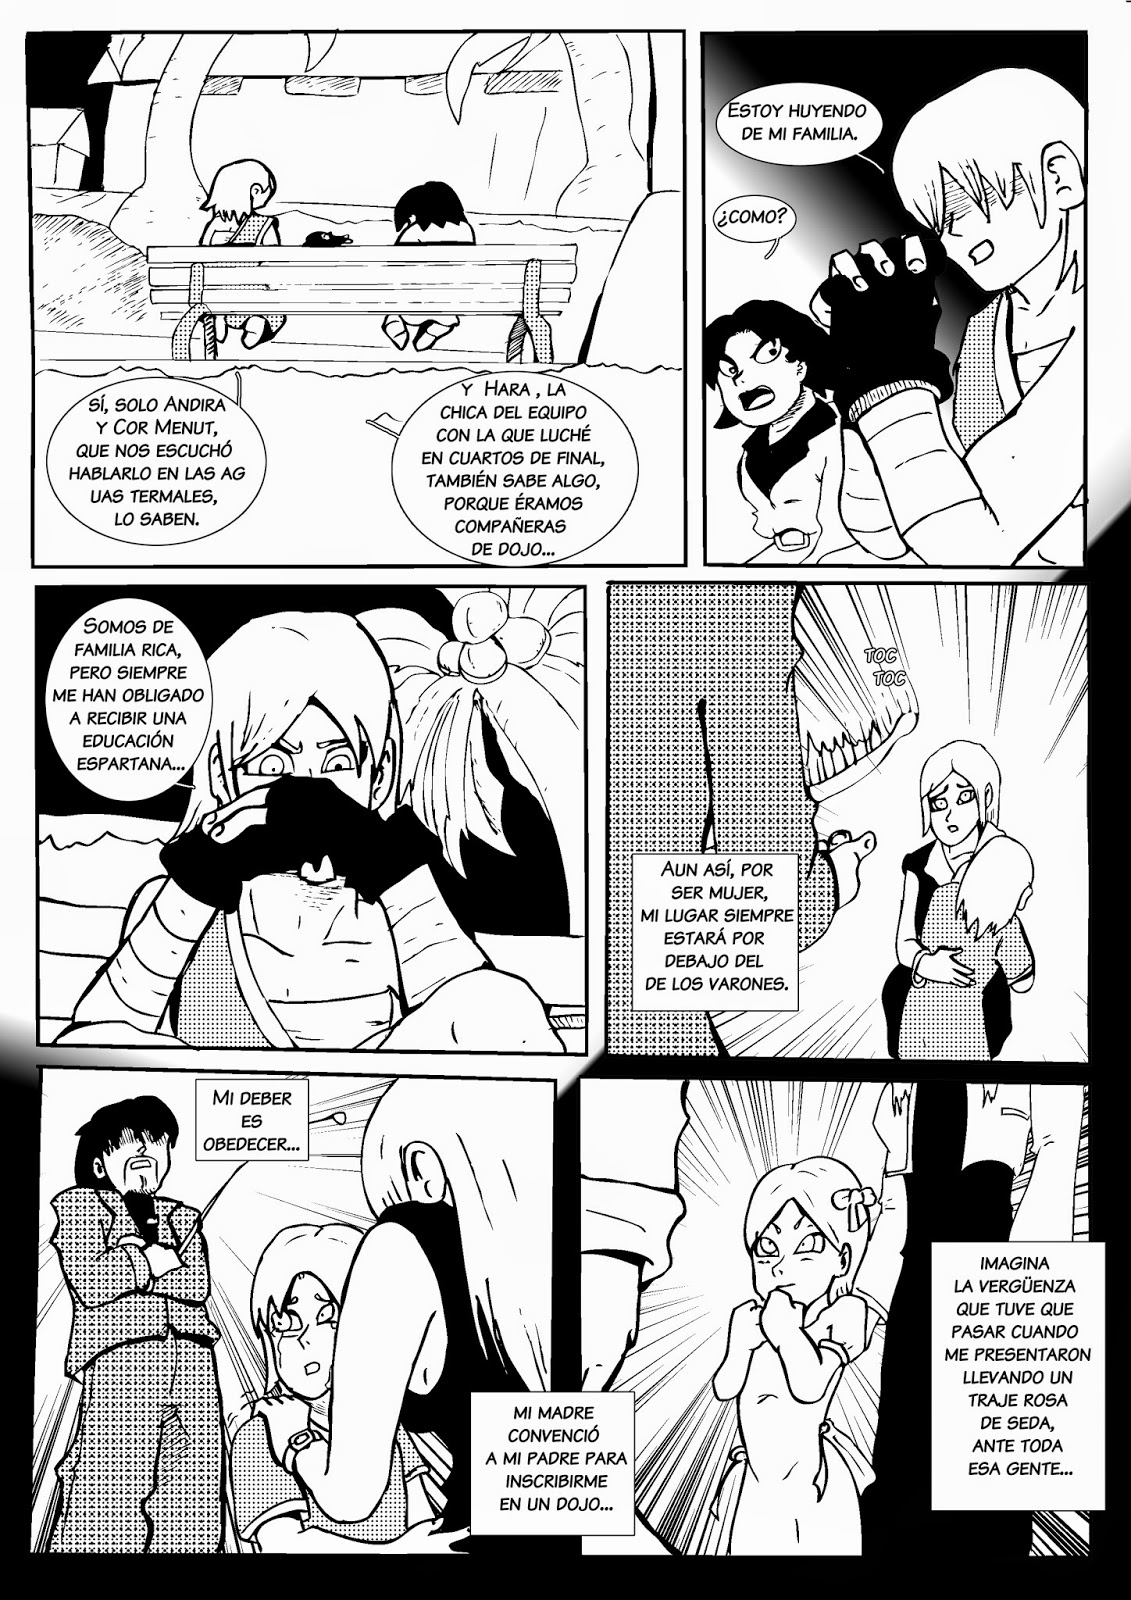 fanmanga: dboth  saga III revelations Chapter 34 sheika gaiden - Página 5 DBOTH+chapter+20+pagina+05